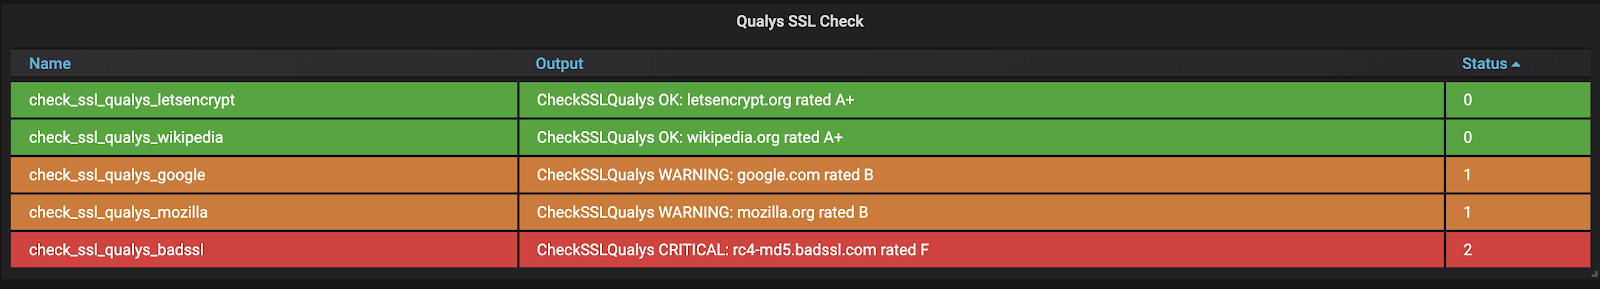 Sensu dashboard showing SSL Labs site score